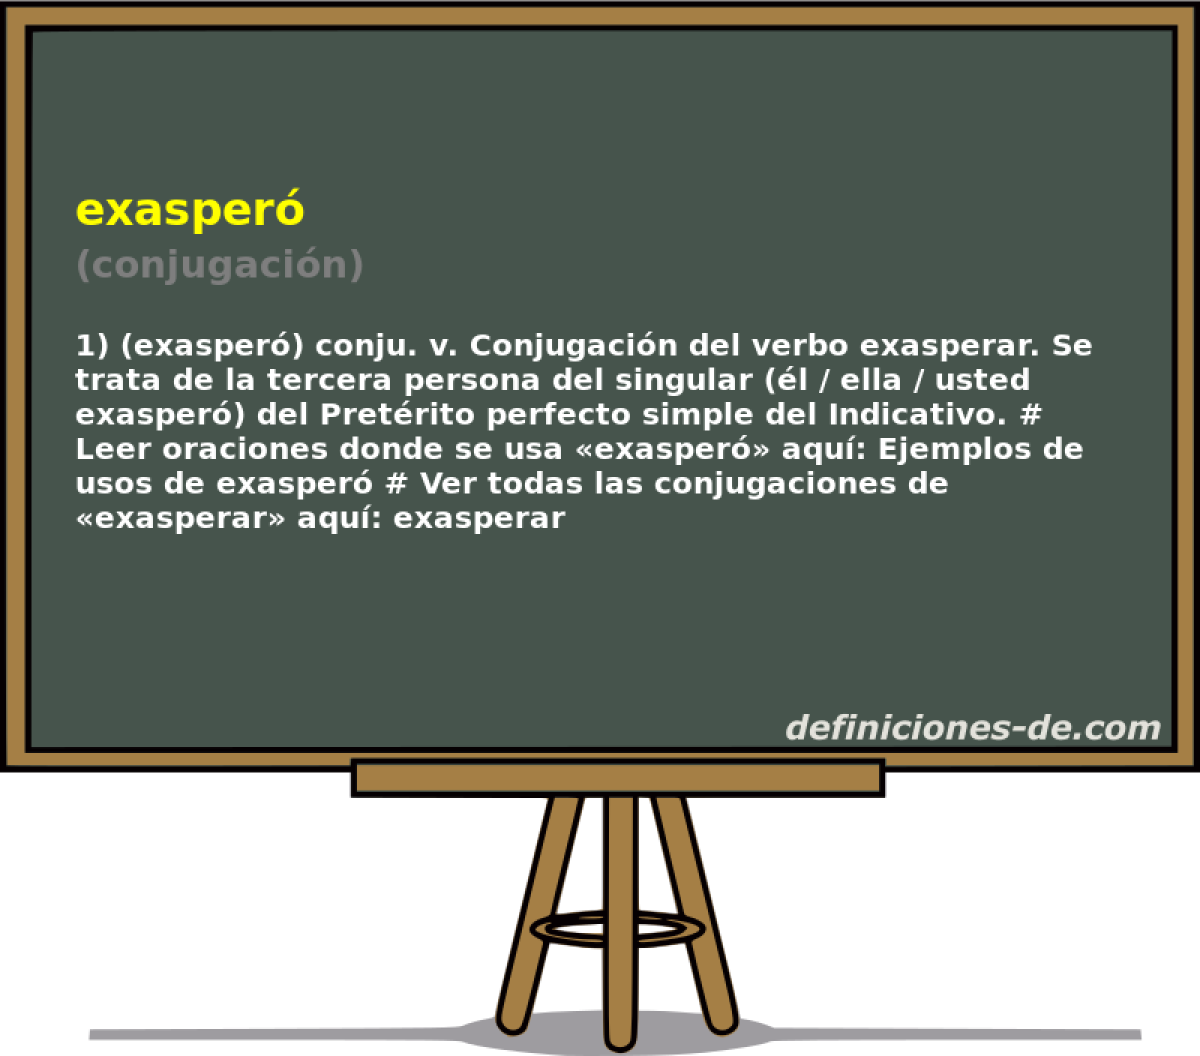 exasper (conjugacin)